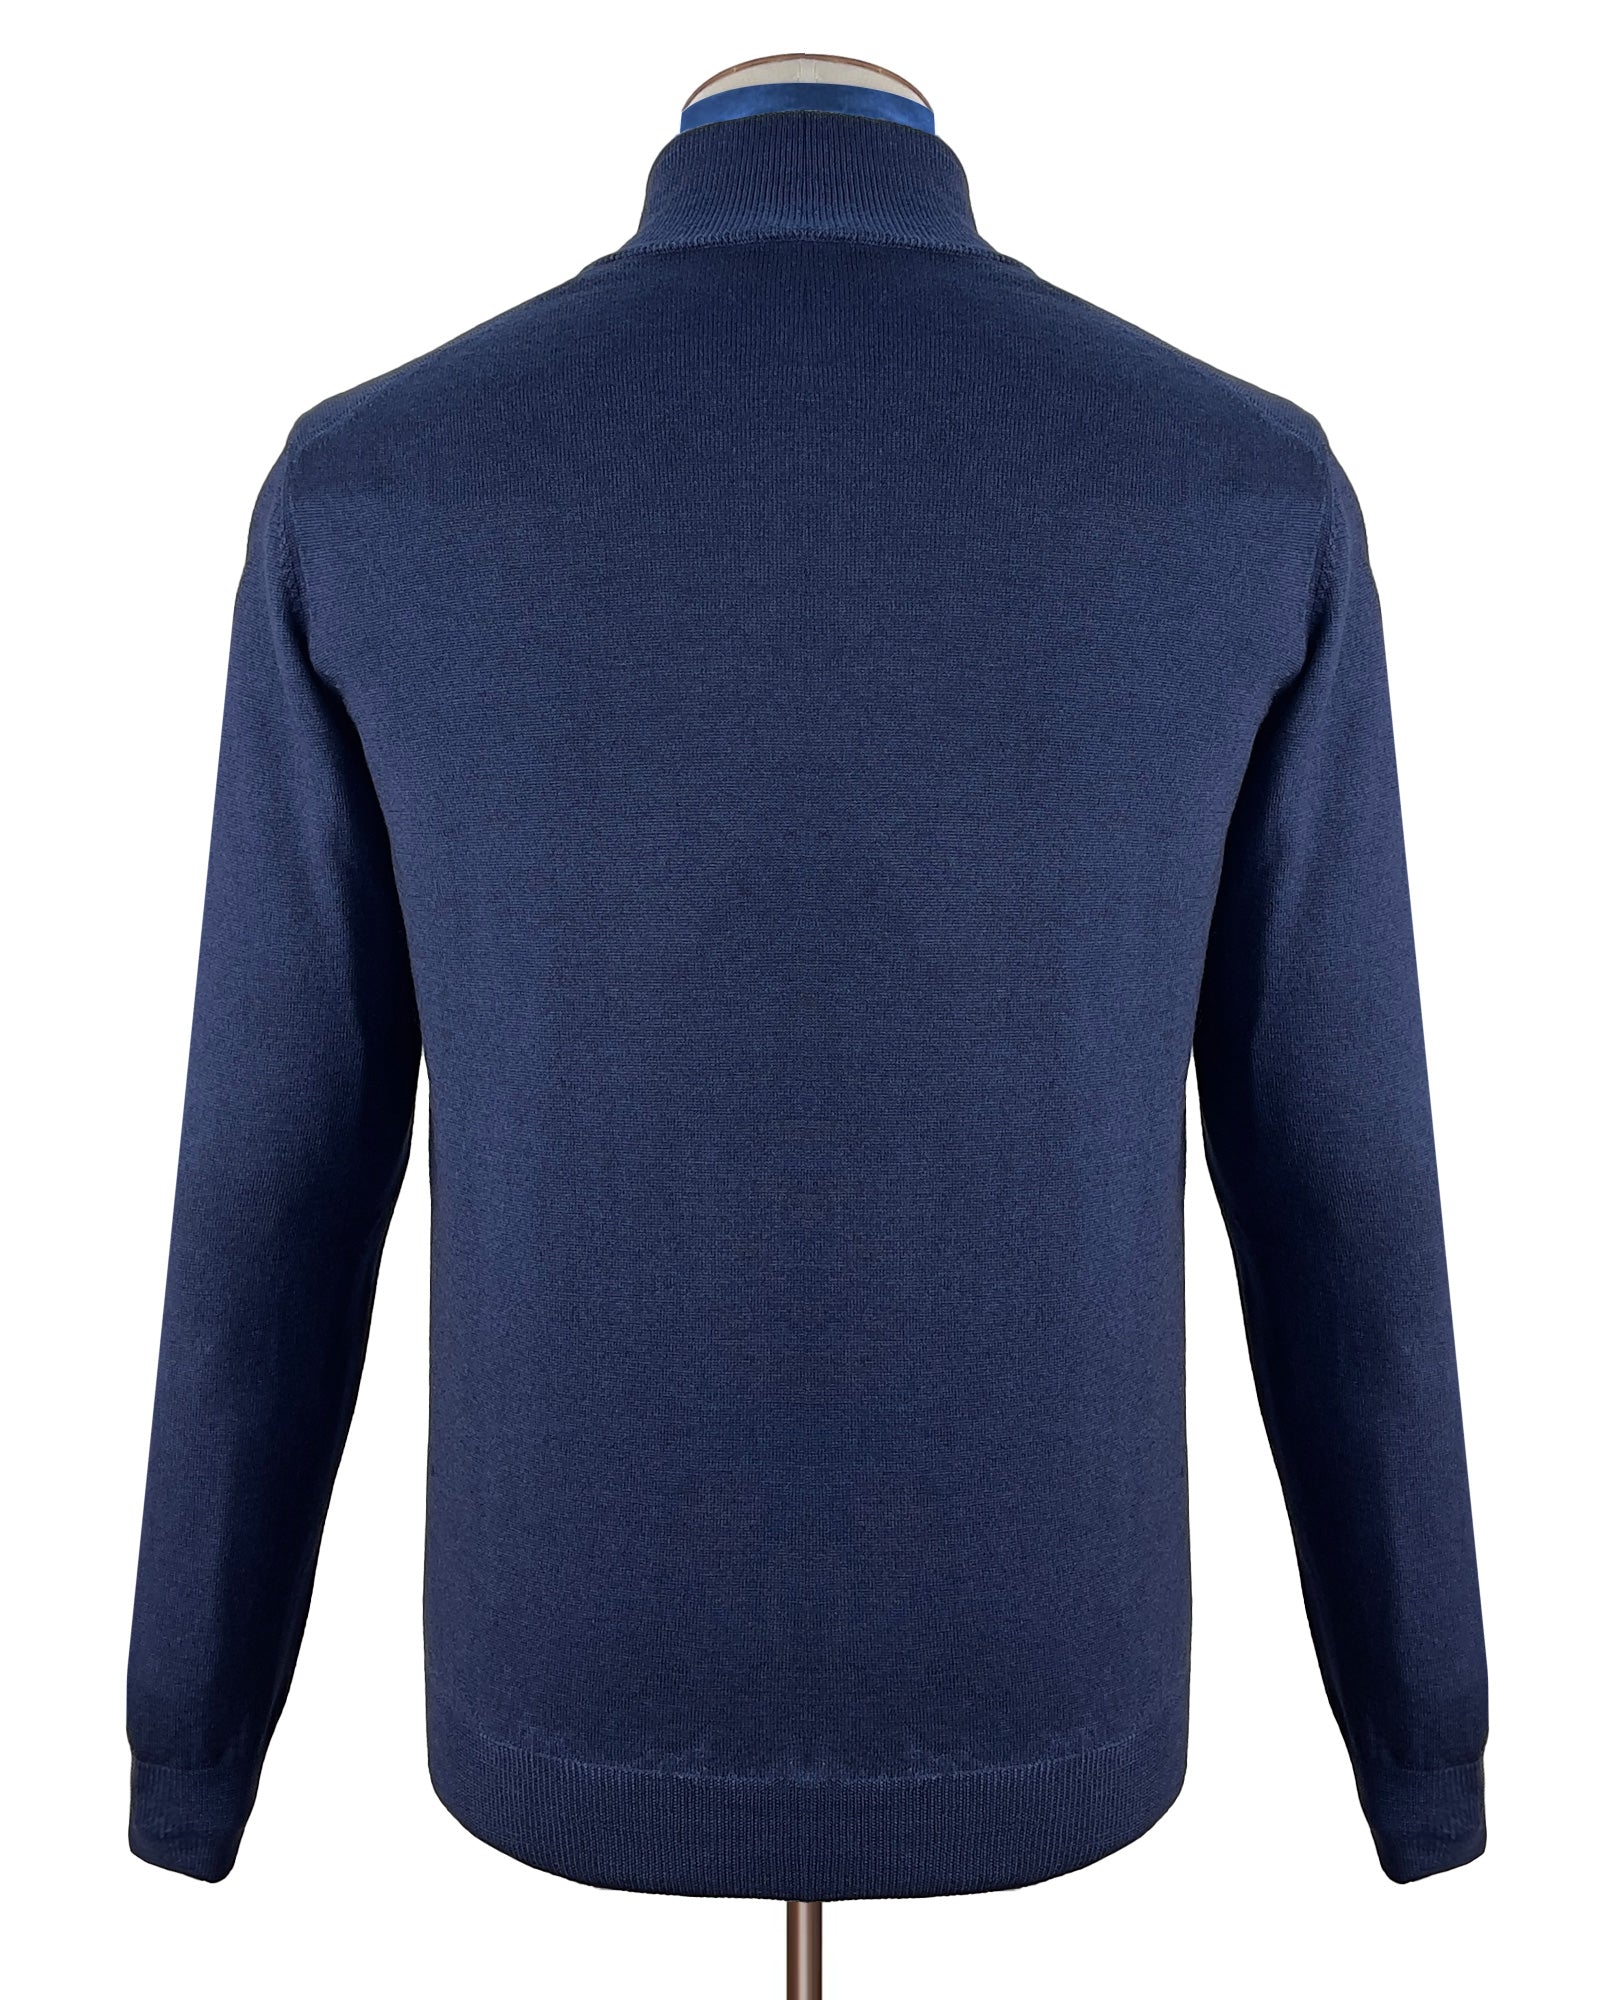 Blue Marle Merino Wool Zip Sweater